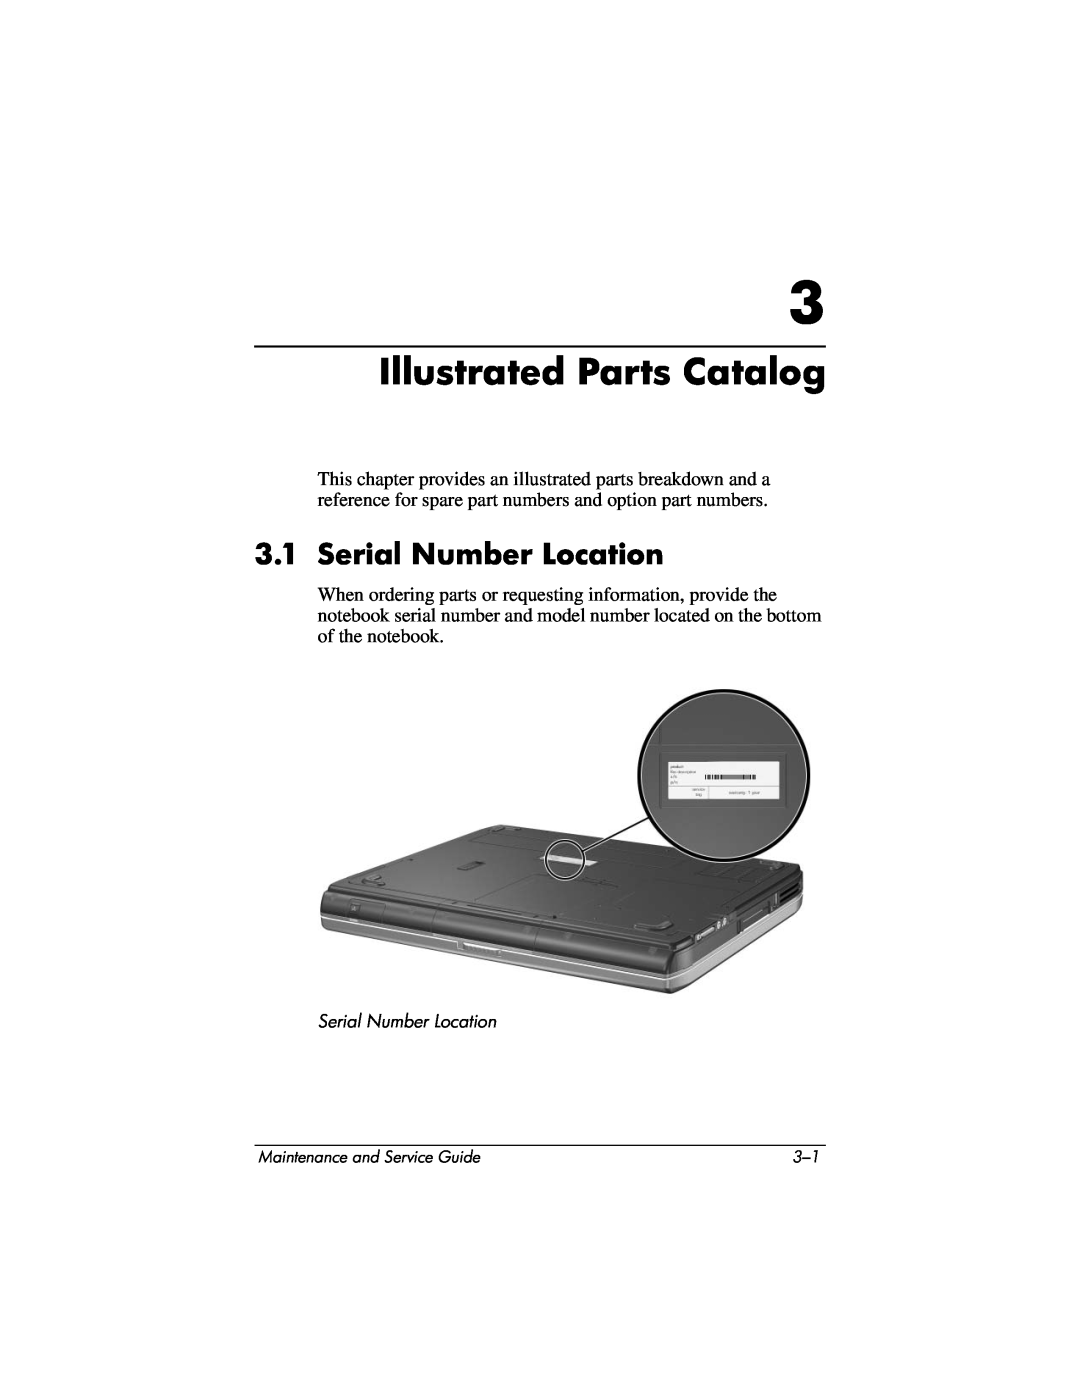 HP ZE4900, NX9040, NX9030, NX9020 manual Illustrated Parts Catalog, Serial Number Location 